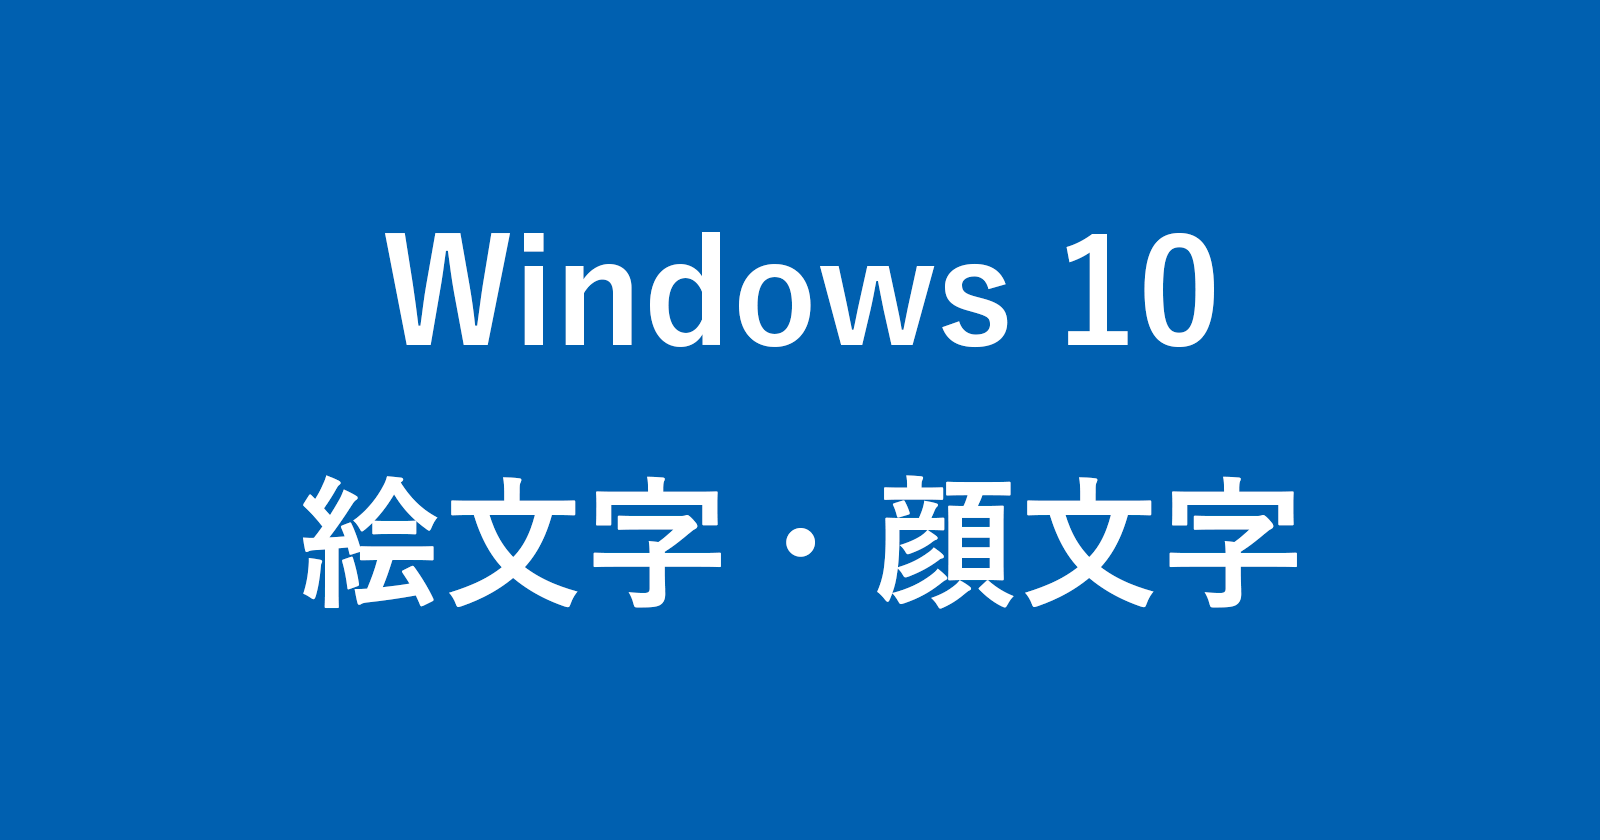 windows 10 emoji symbols